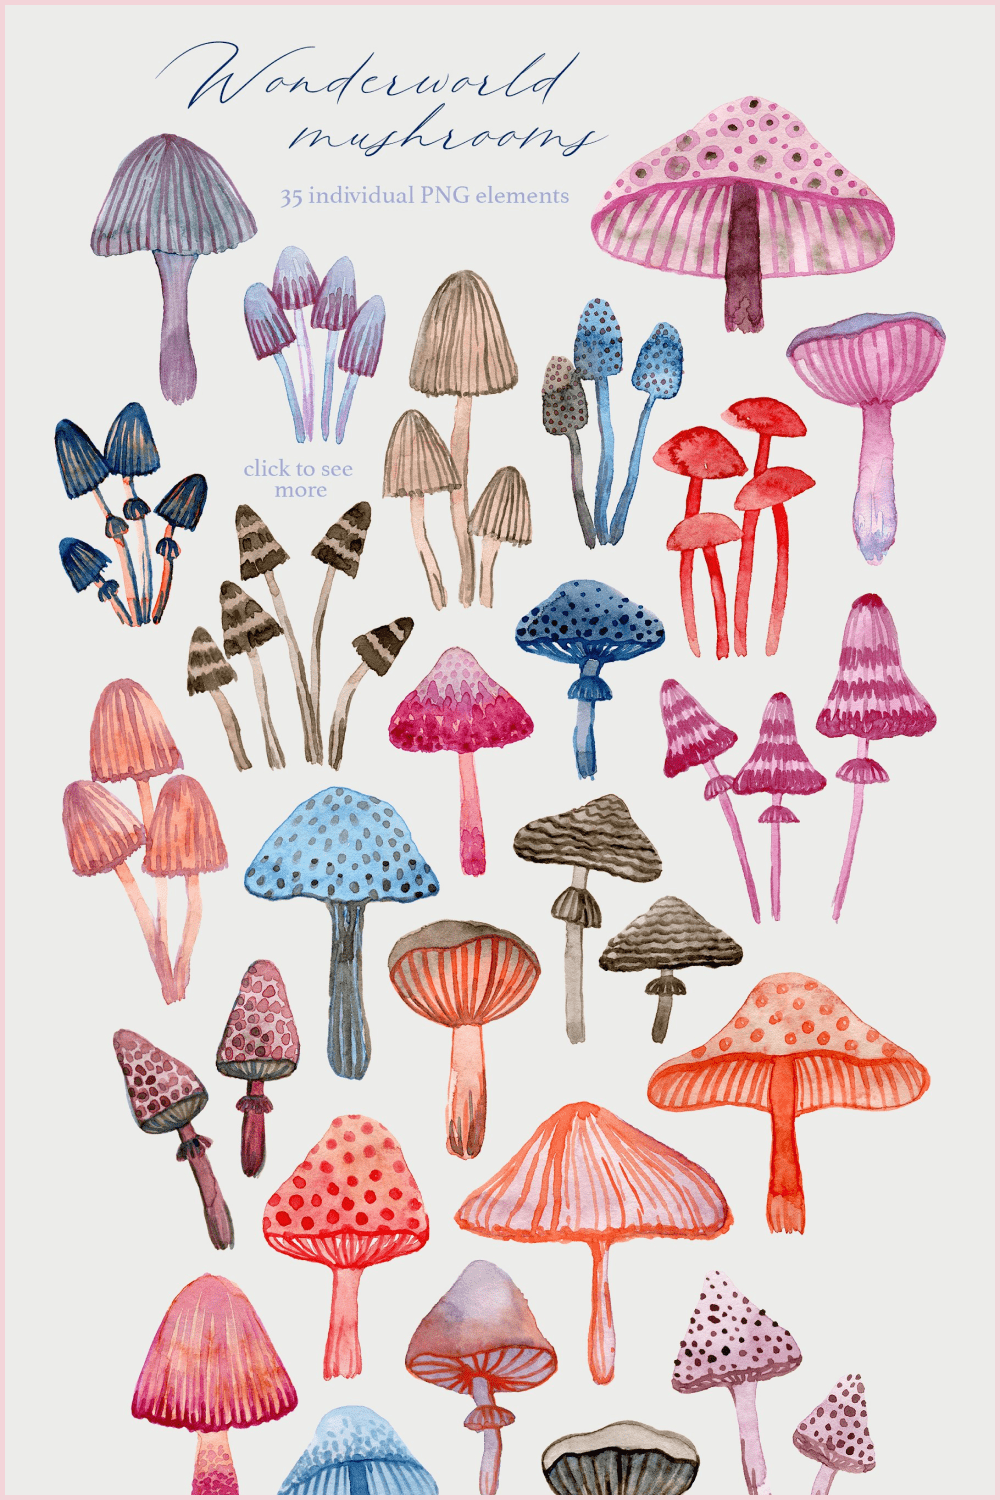 Wonderland watercolor mushrooms - pinterest image preview.